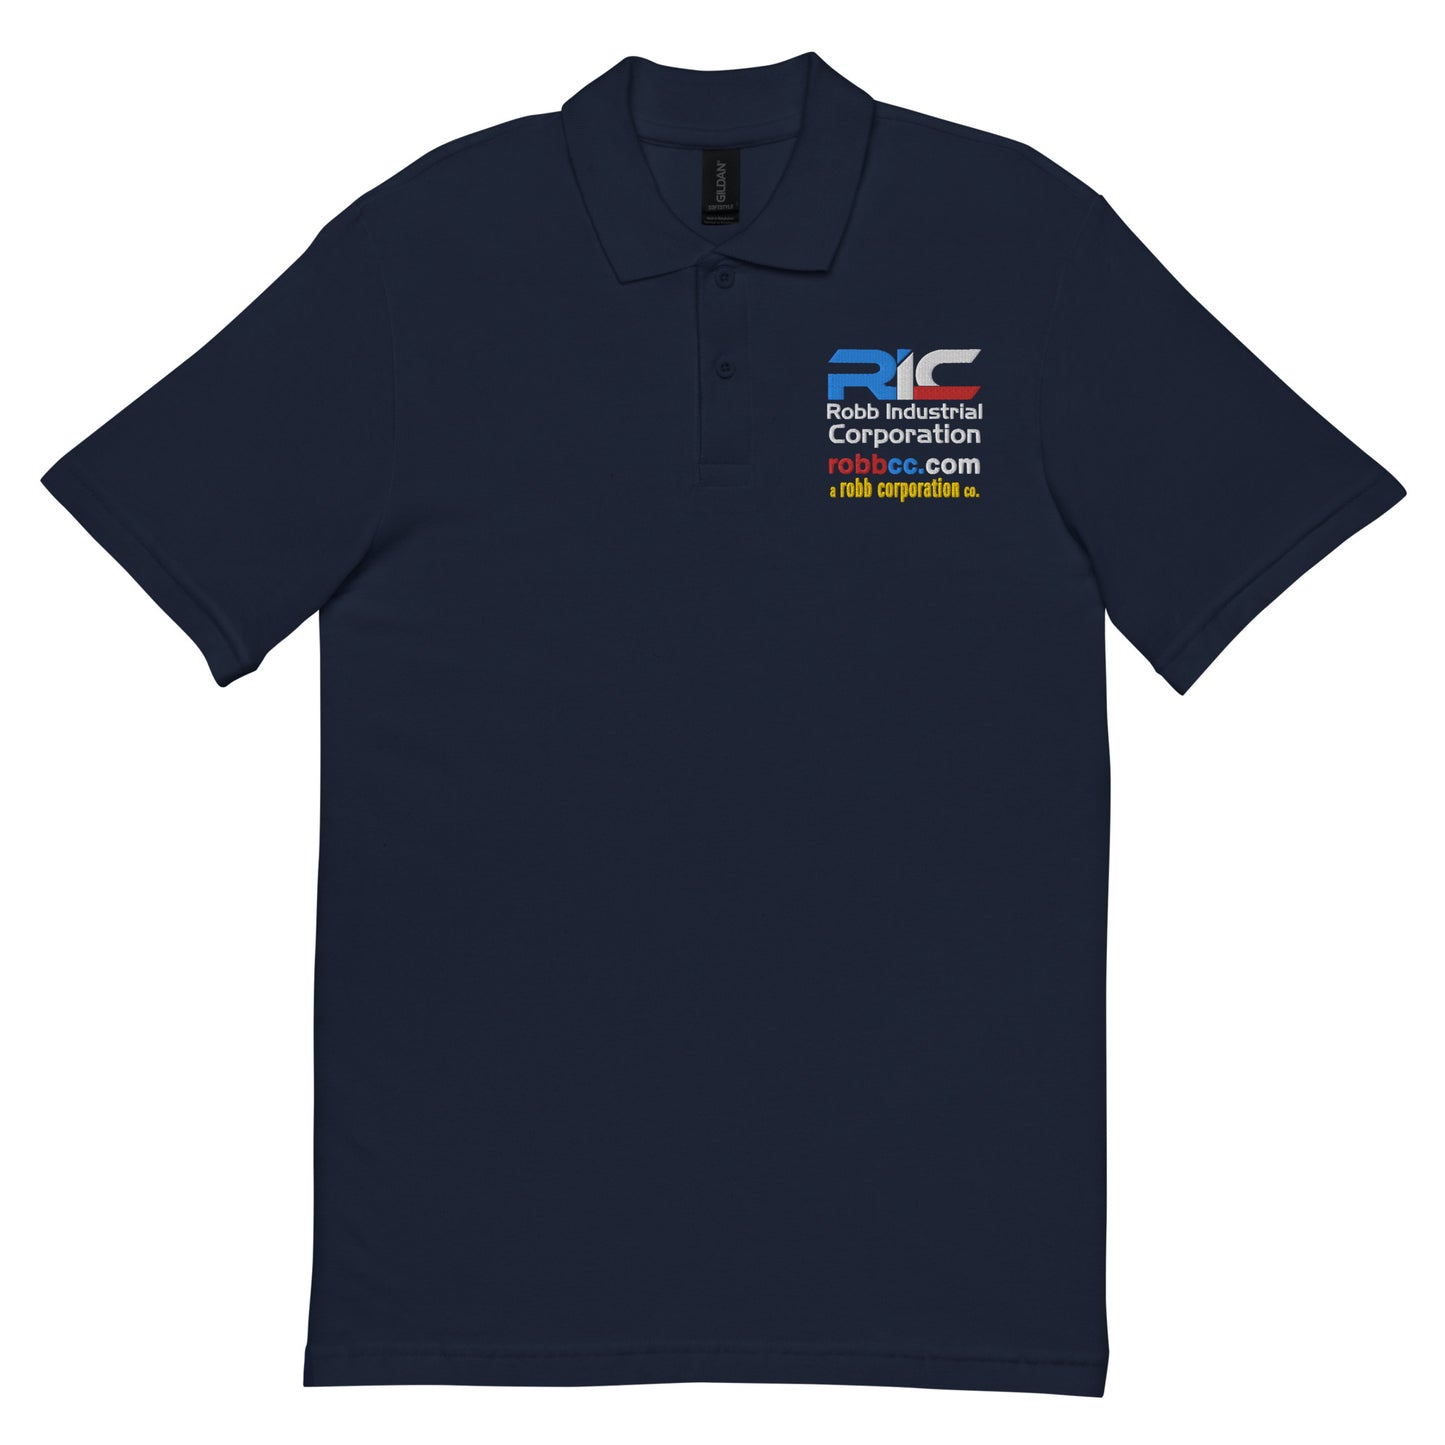 Robb Industrial Corporation pique polo shirt (navy)